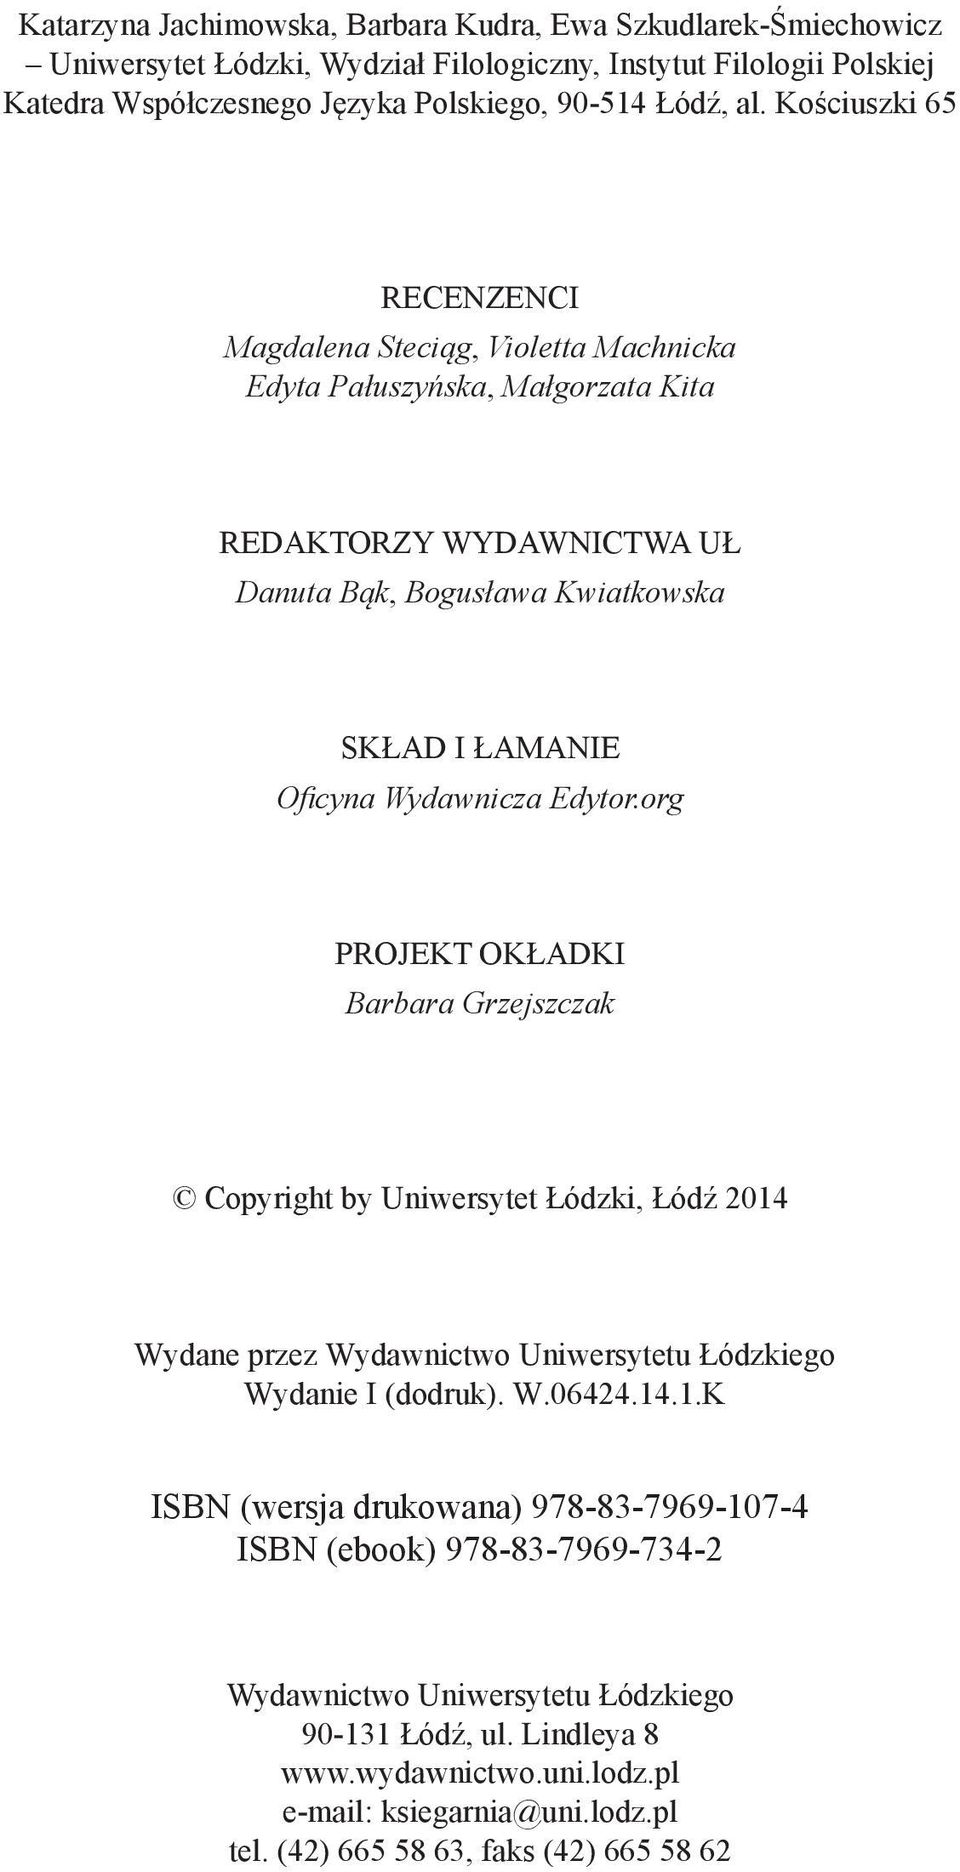 Edytor.org PROJEKT OKŁADKI Barbara Grzejszczak Copyright by Uniwersytet Łódzki, Łódź 2014